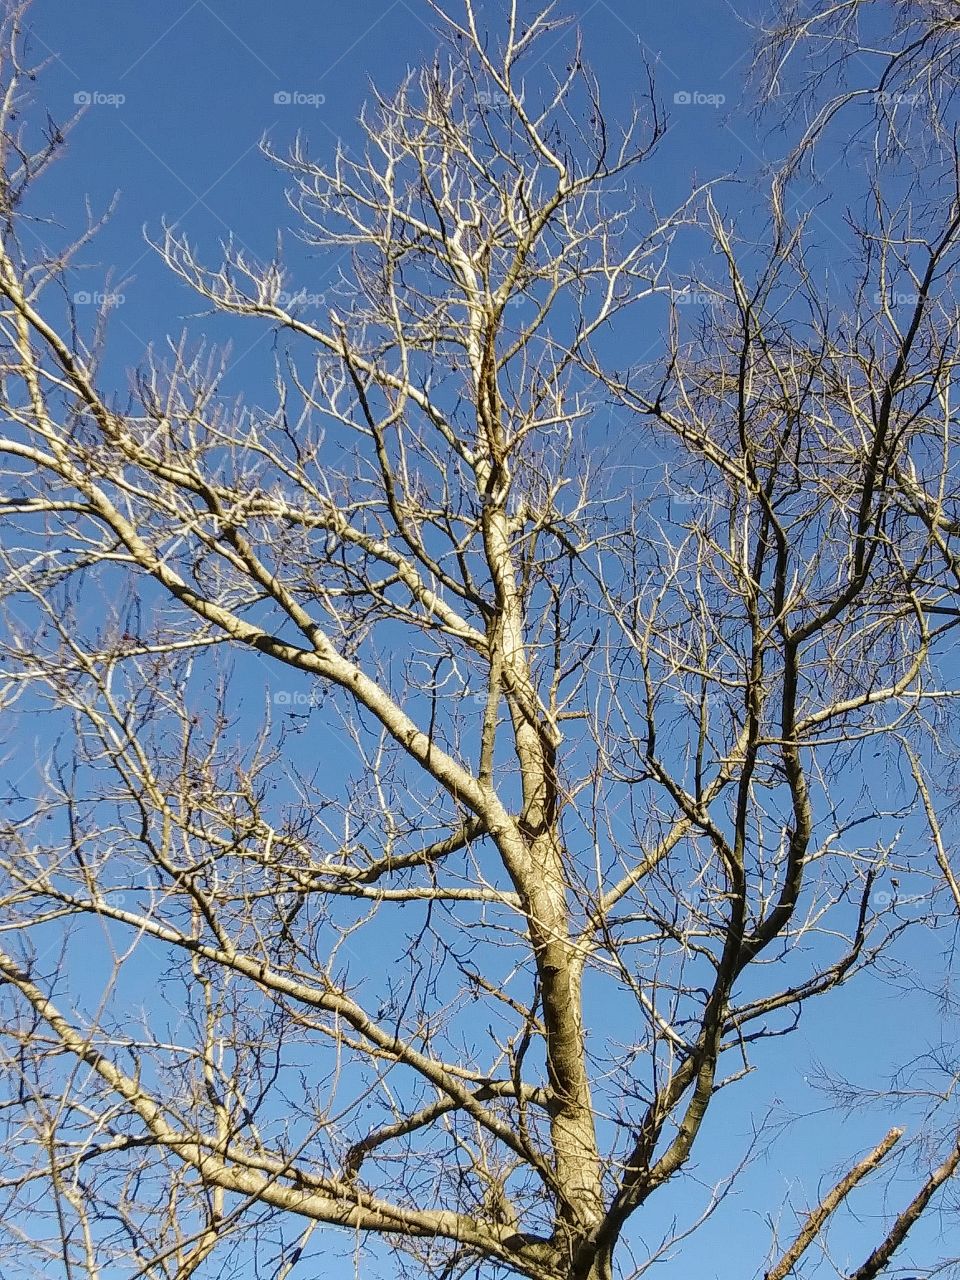 afternoon sun on a tree